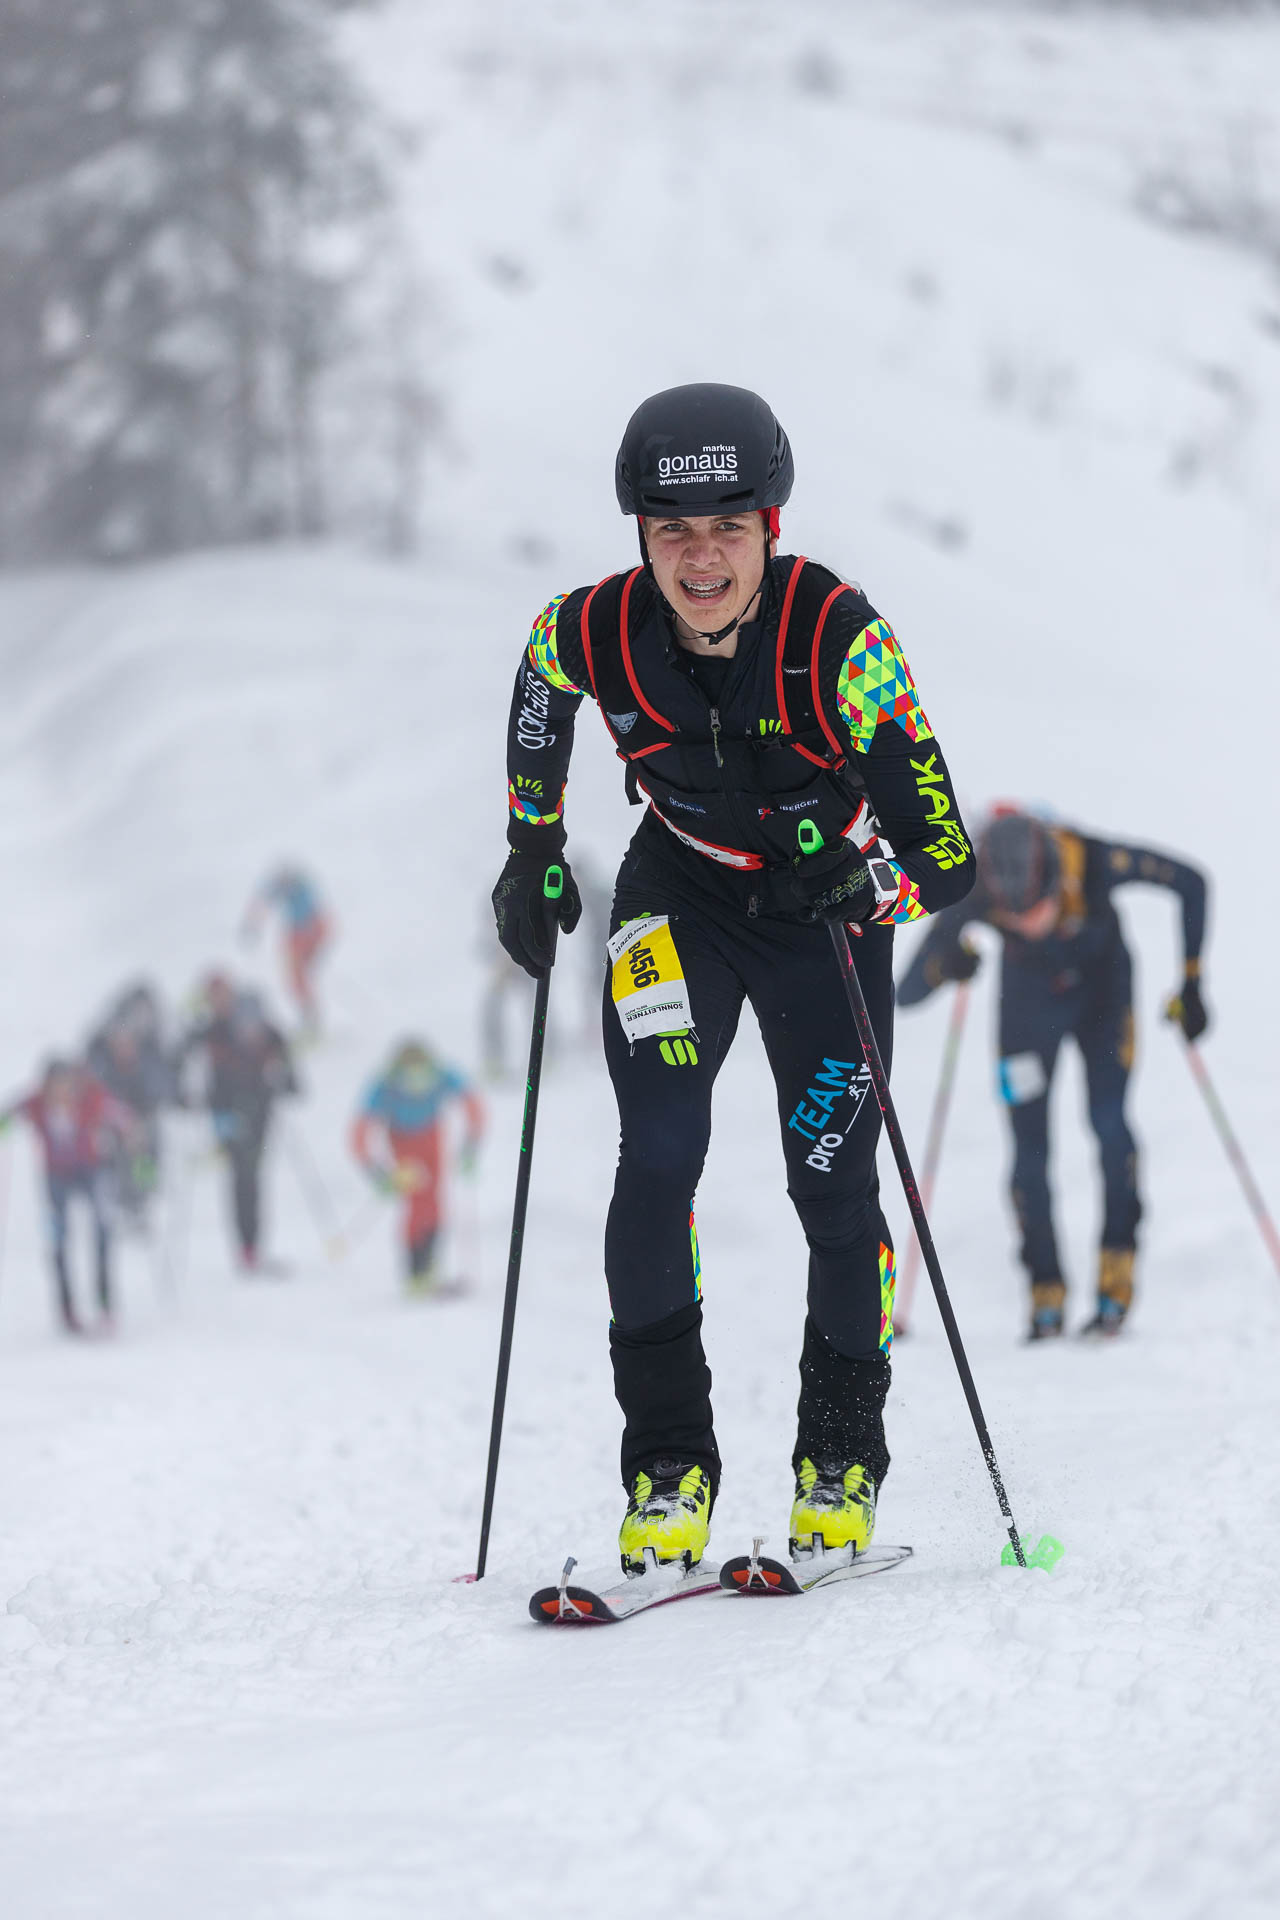 Jennerstier 2018, Vertical Race, German Championships, Berchtesgaden, Germany.